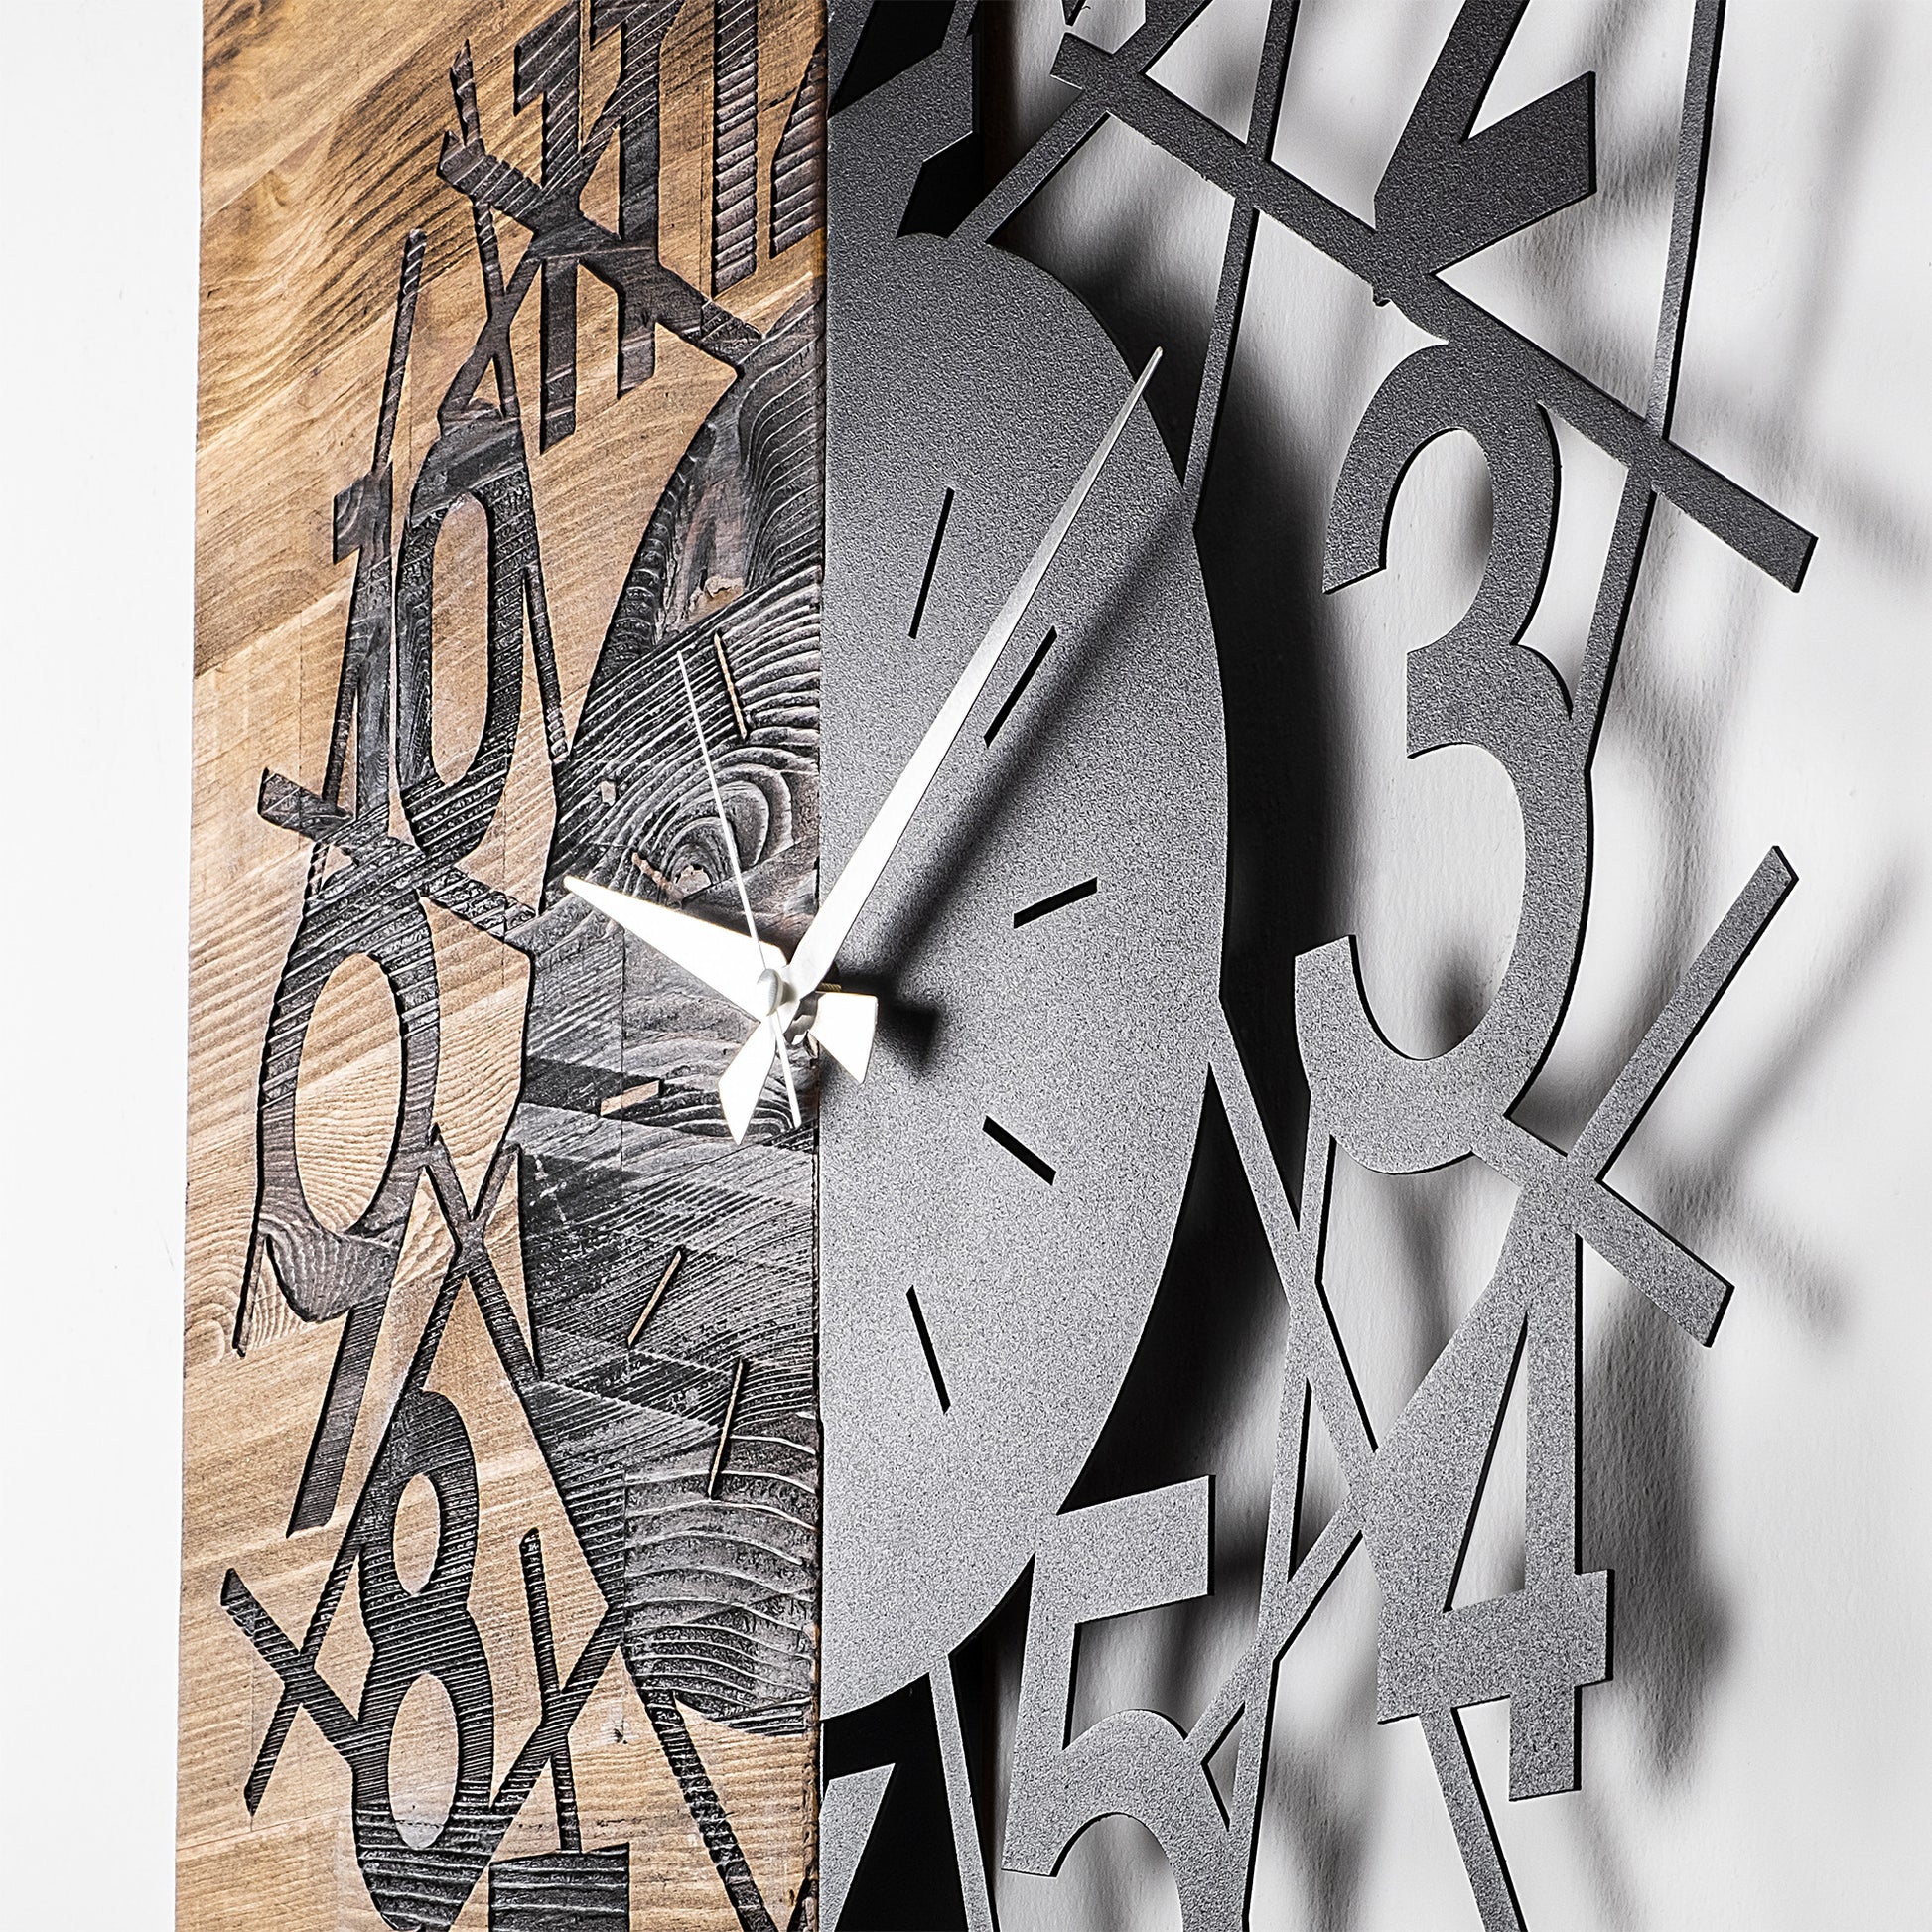 TAKK Wooden Clock 26 - NordlyHome.dk